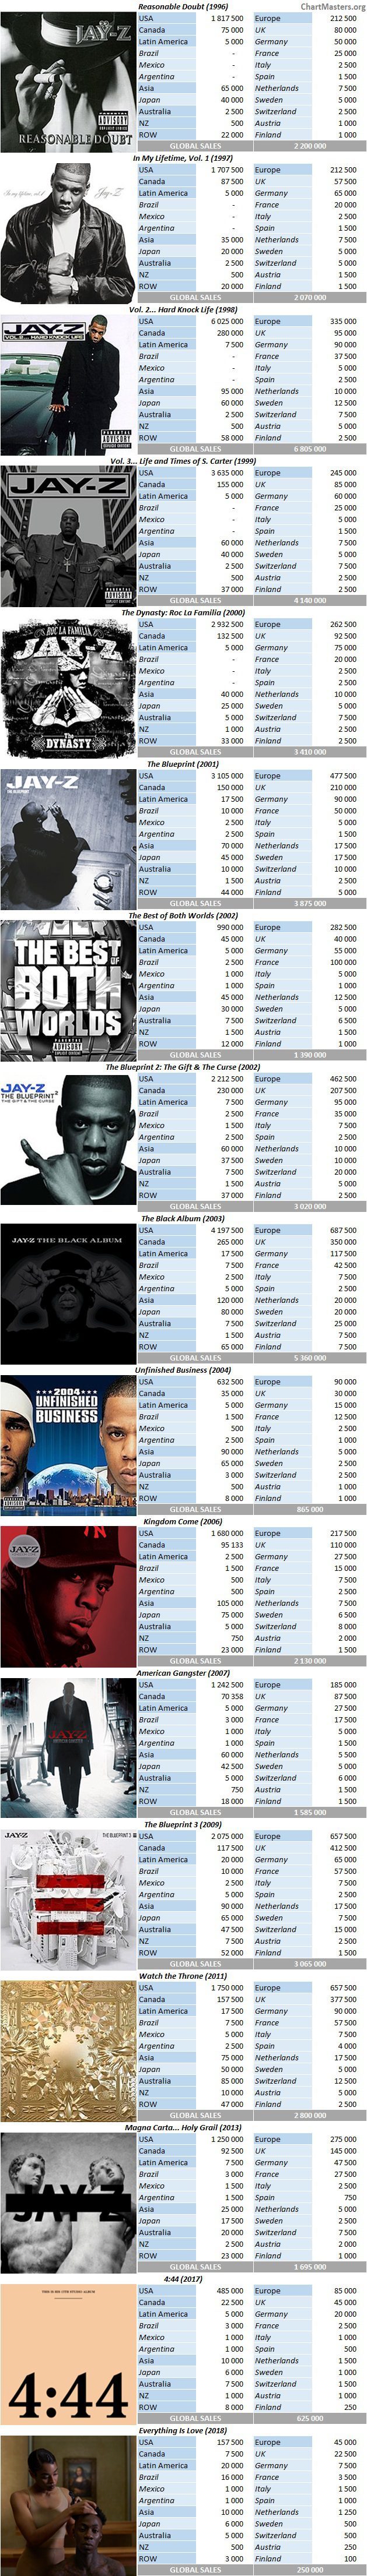 CSPC Jay-Z album sales breakdowns